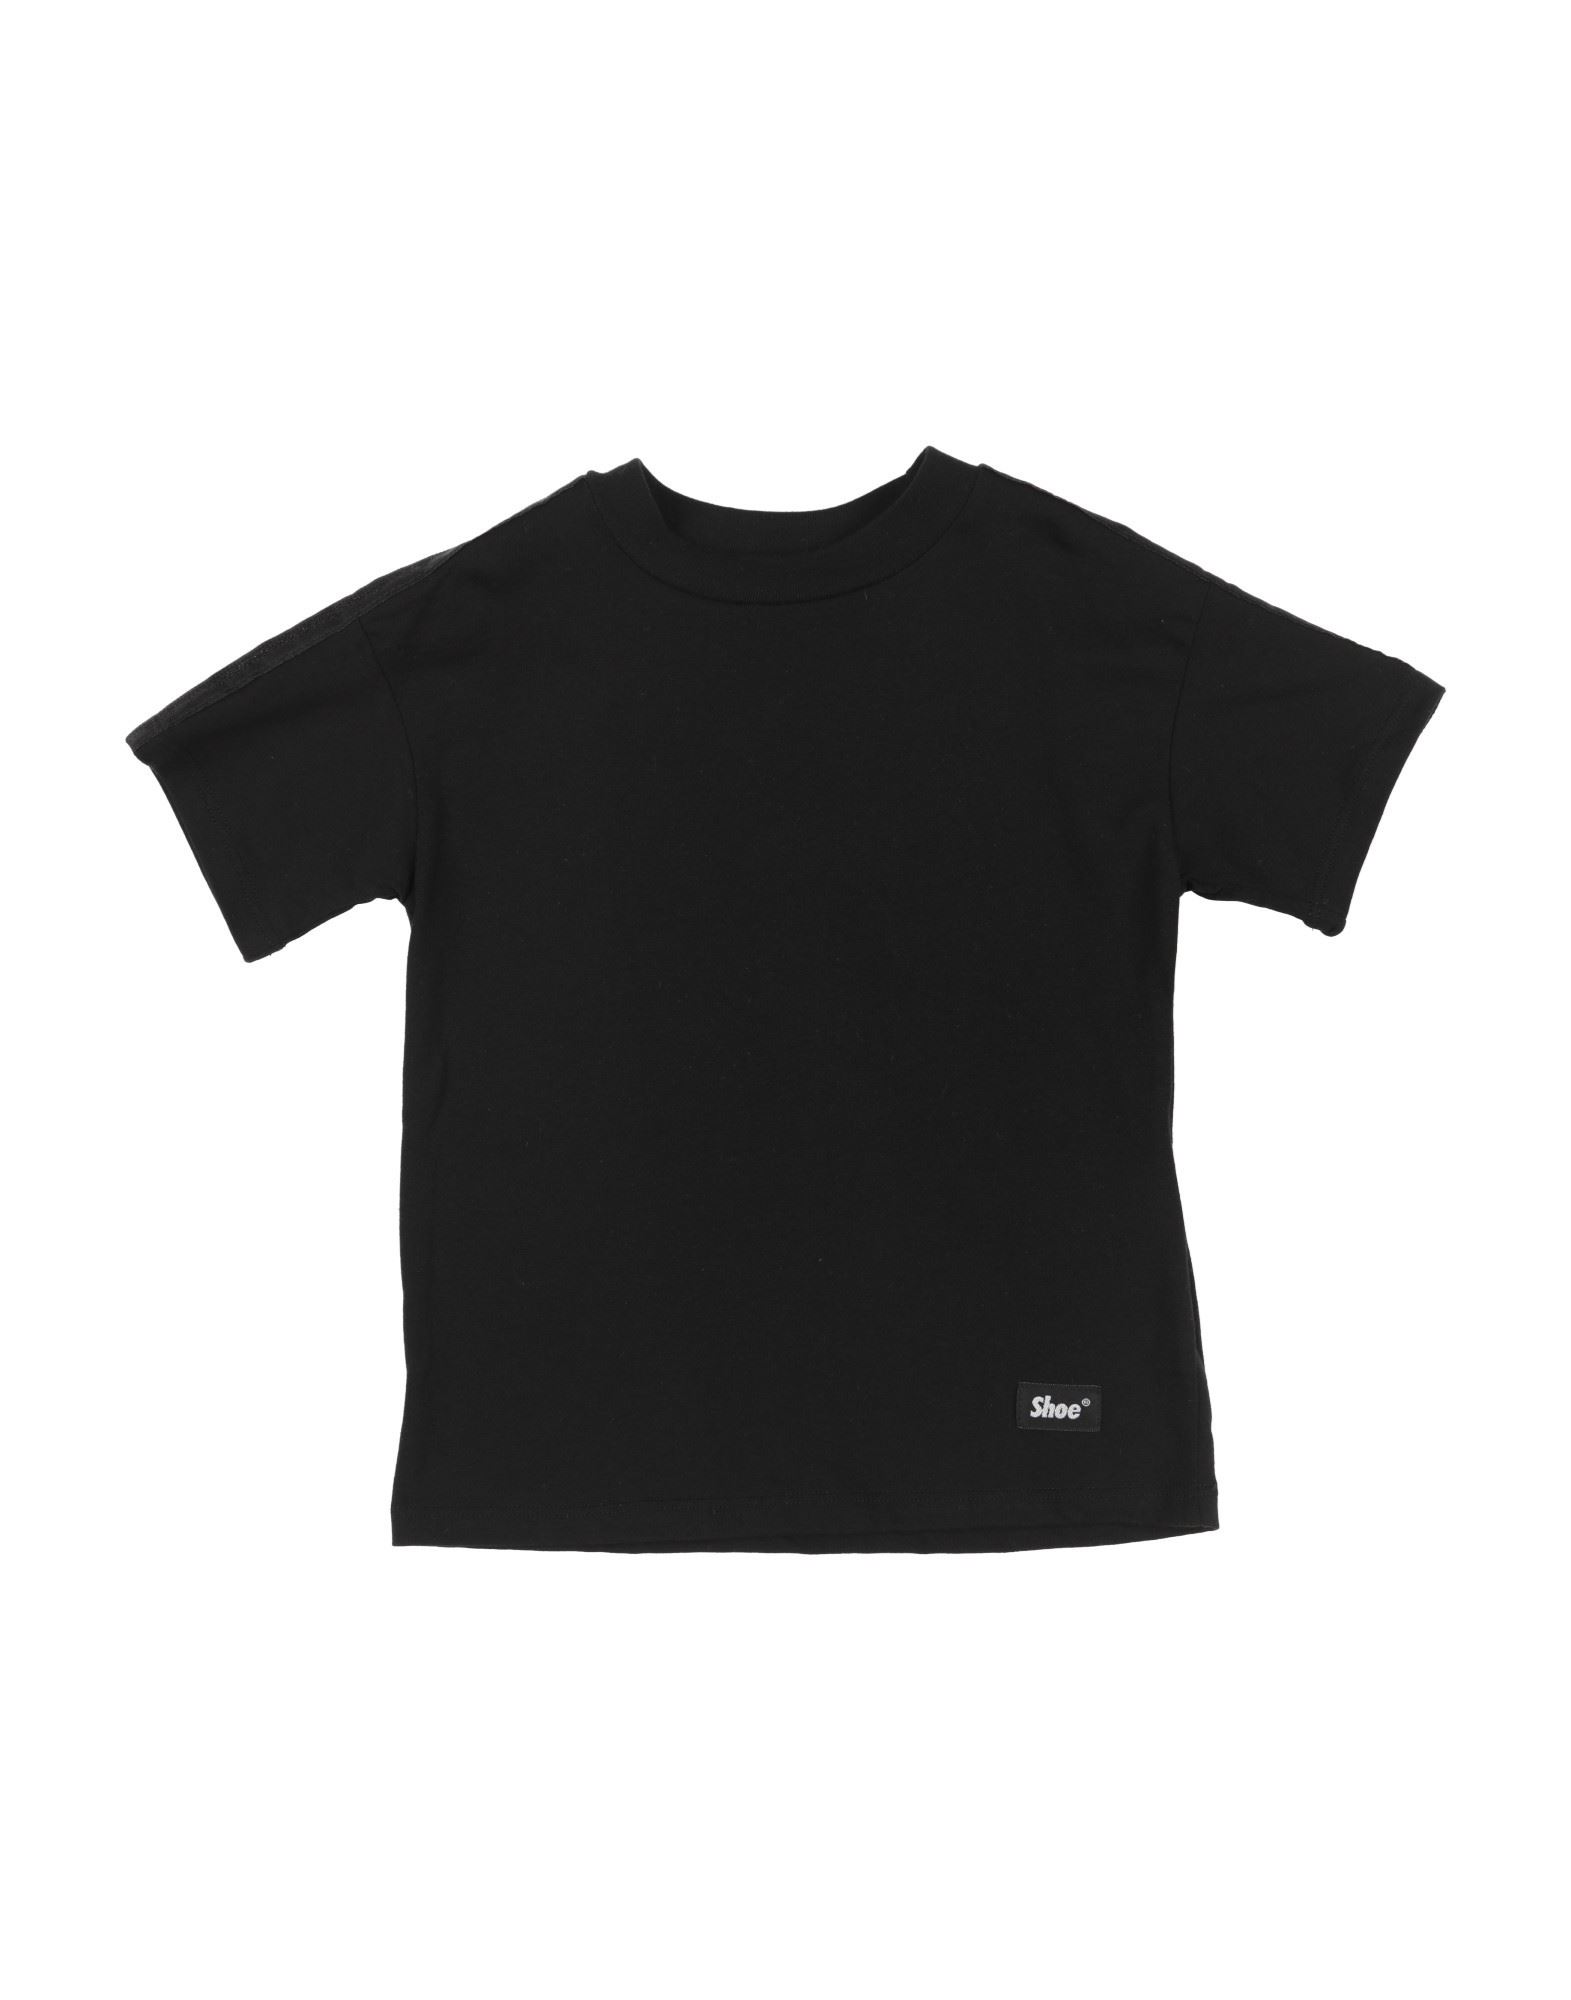 Shoe® Kids' Shoe Toddler Girl T-shirt Black Size 4 Cotton